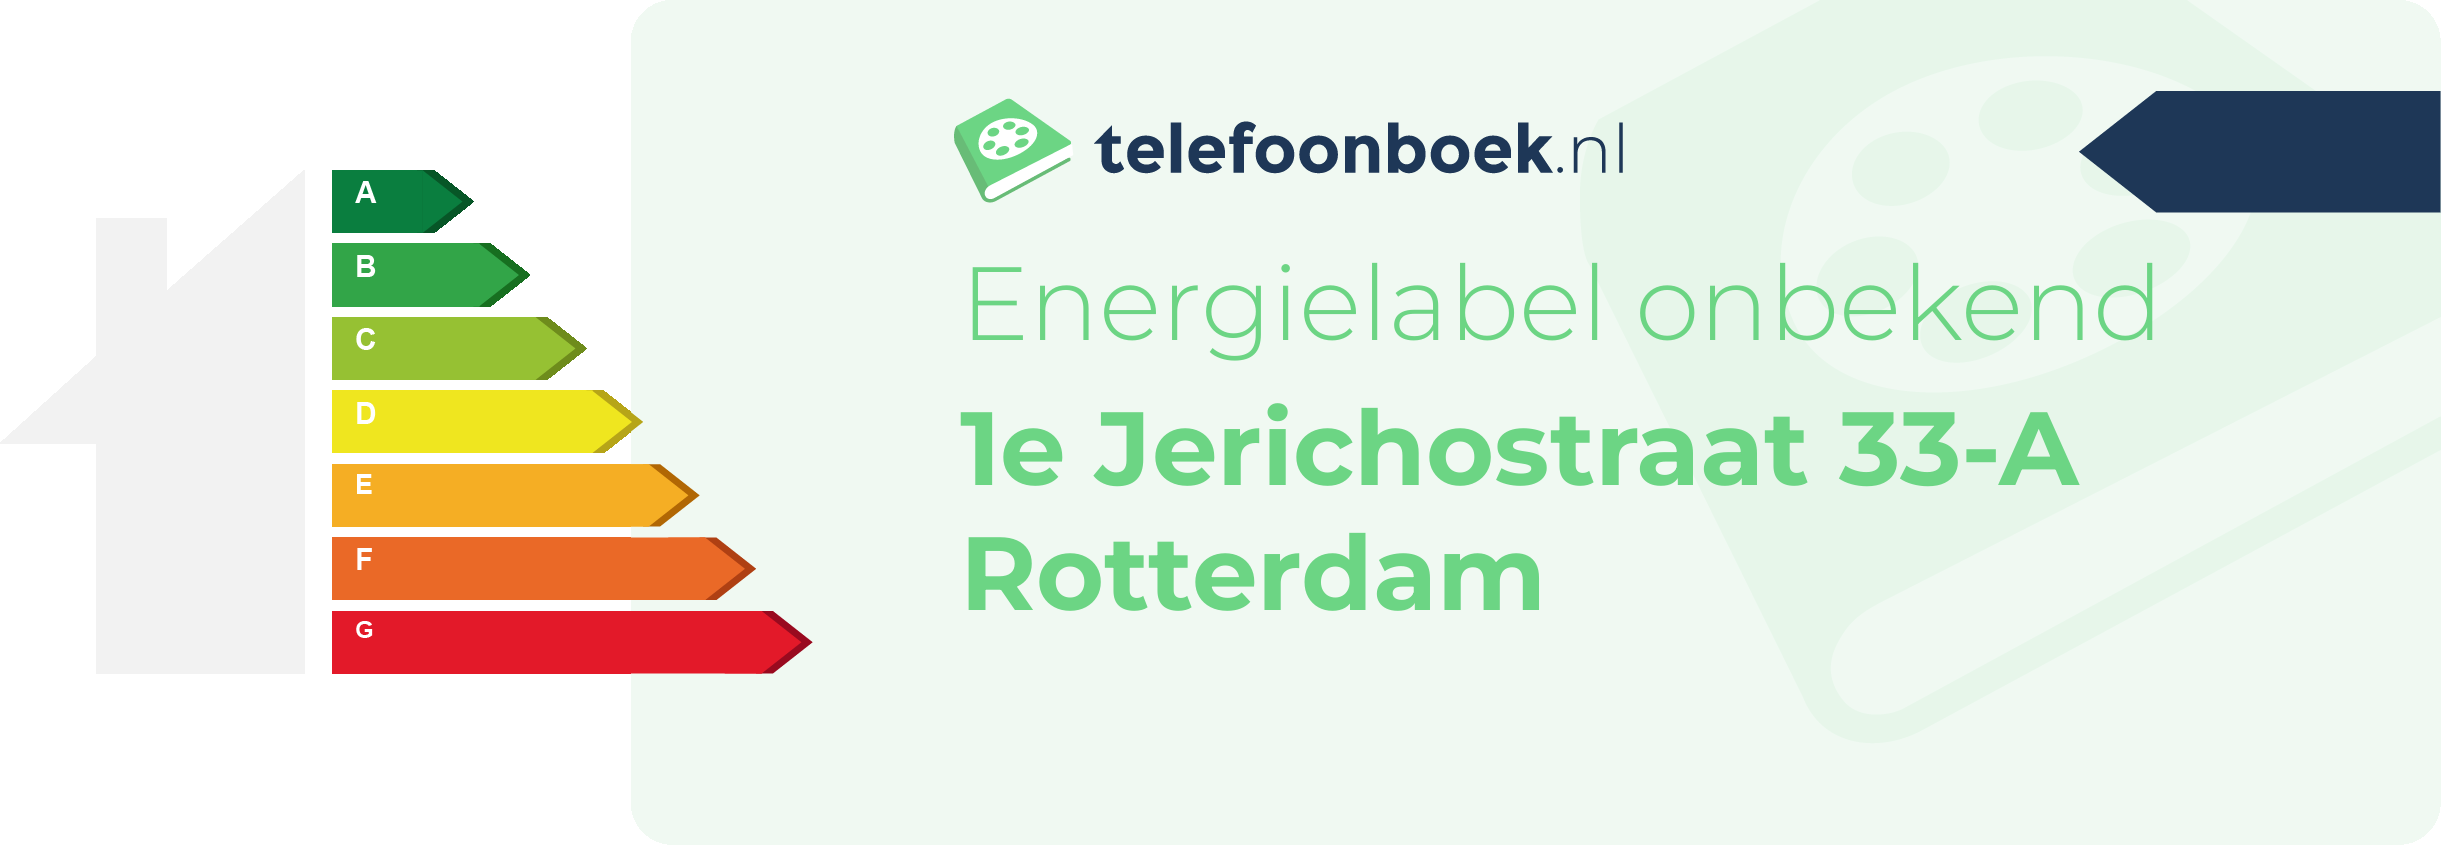 Energielabel 1e Jerichostraat 33-A Rotterdam